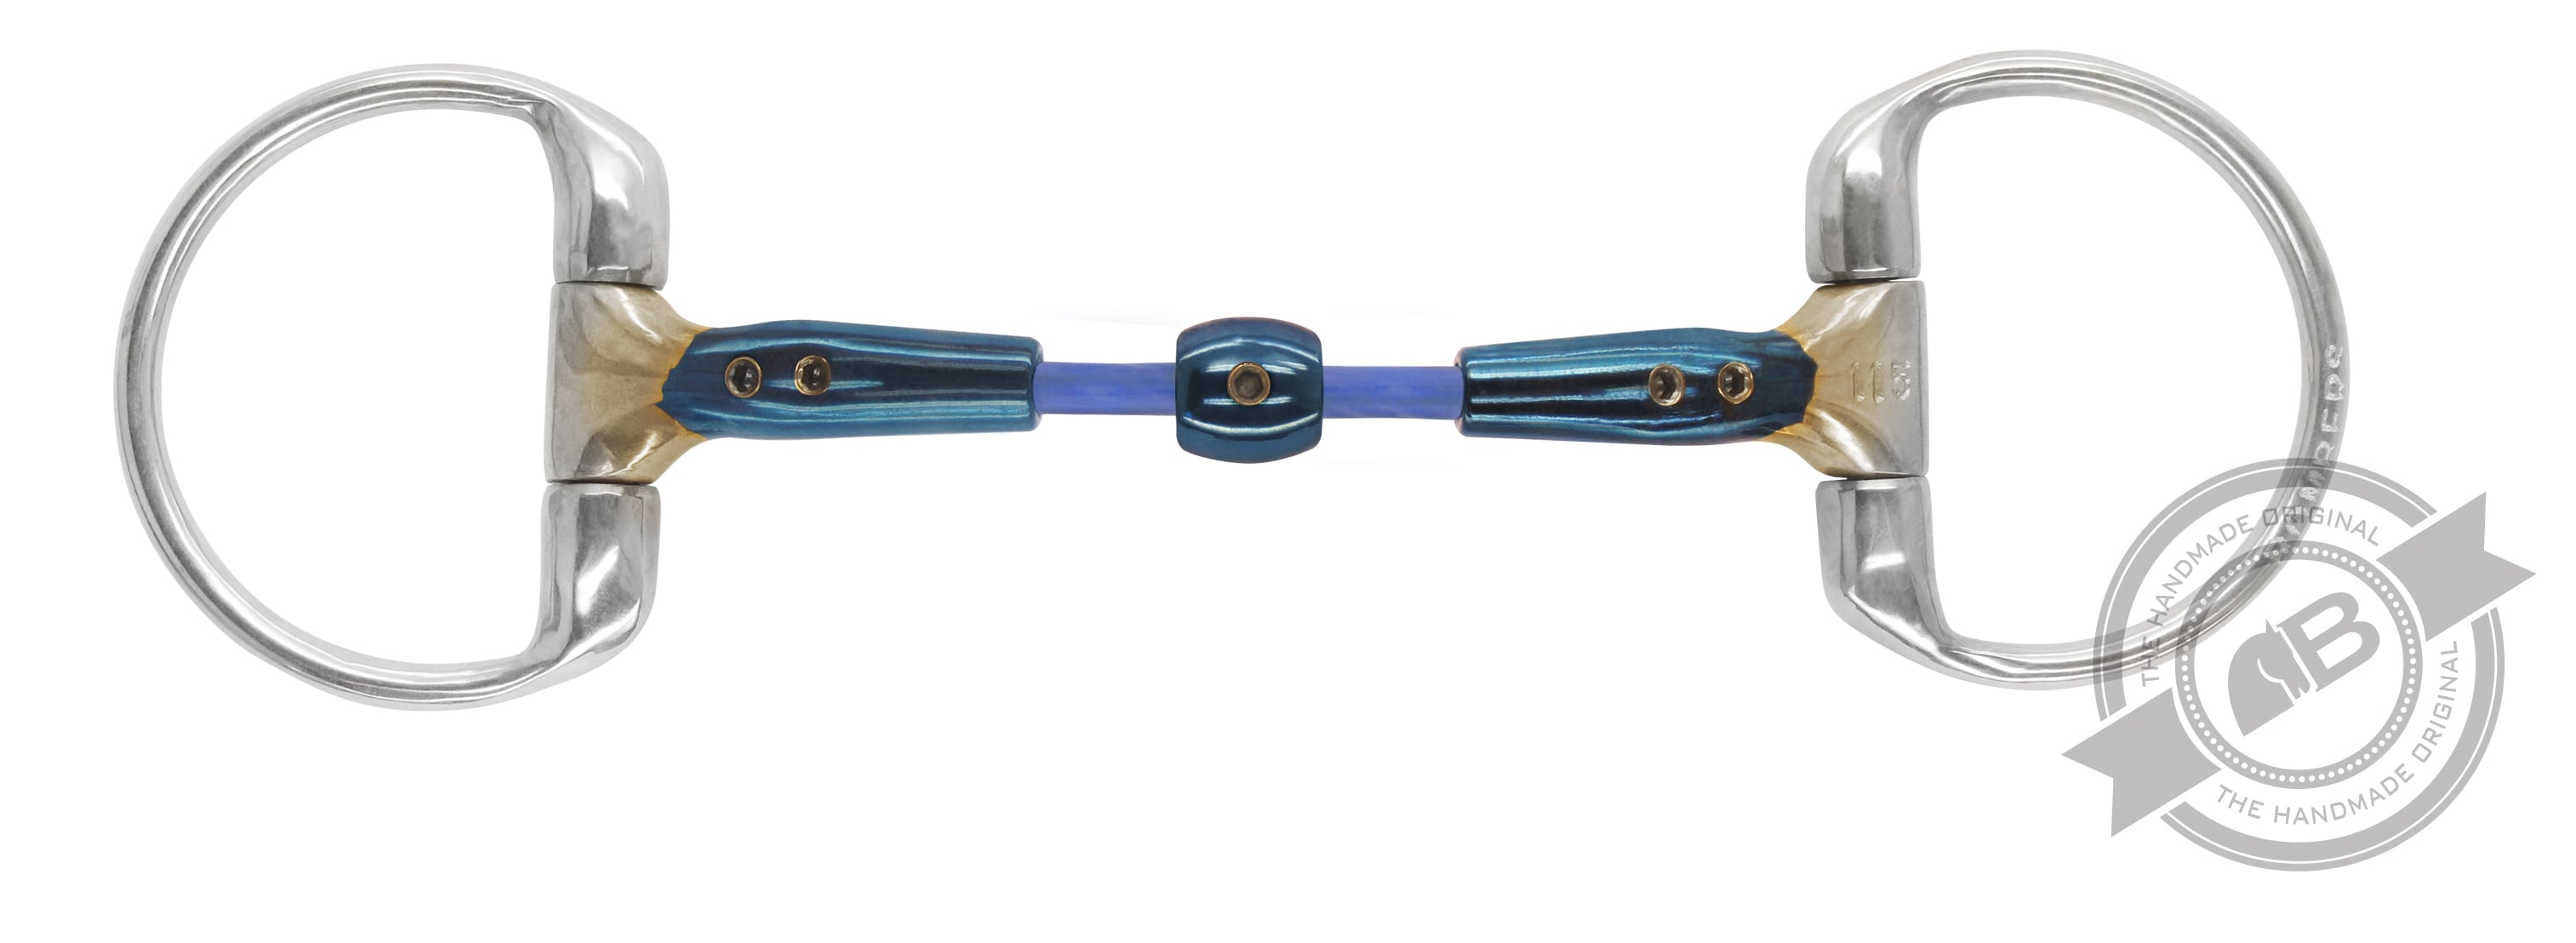 Eggbett Elliptical Cable - 14 mm